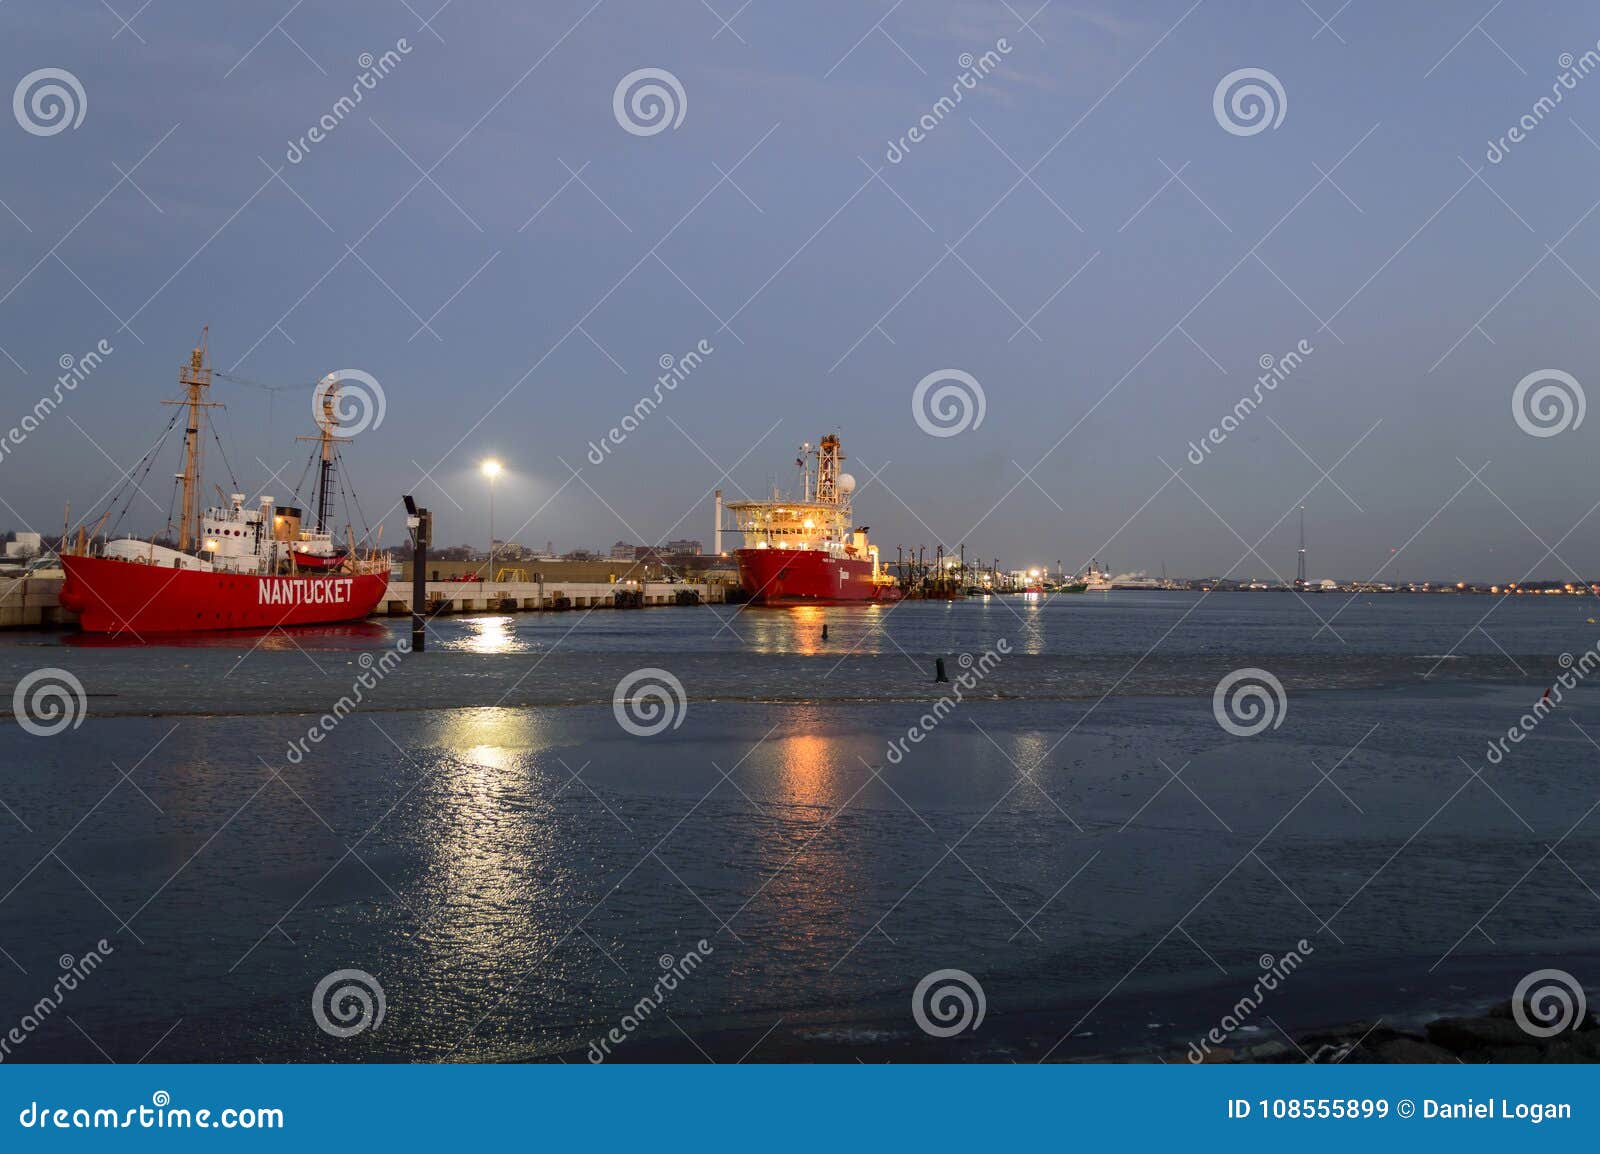 14 Nantucket Lightship Images, Stock Photos & Vectors